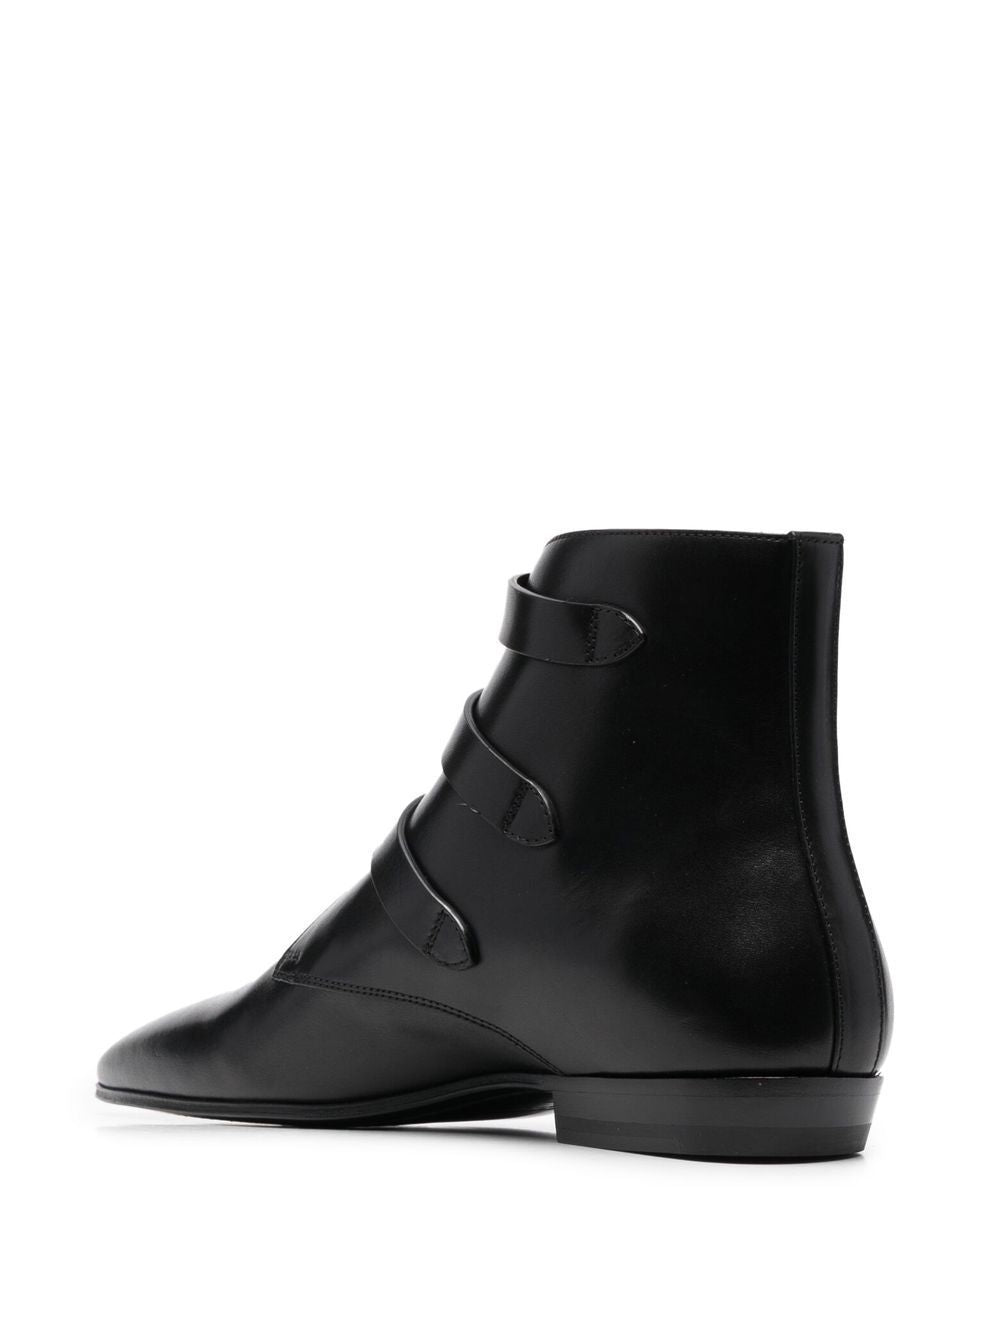 SAINT LAURENT Black Gothic Manito Boots for Men